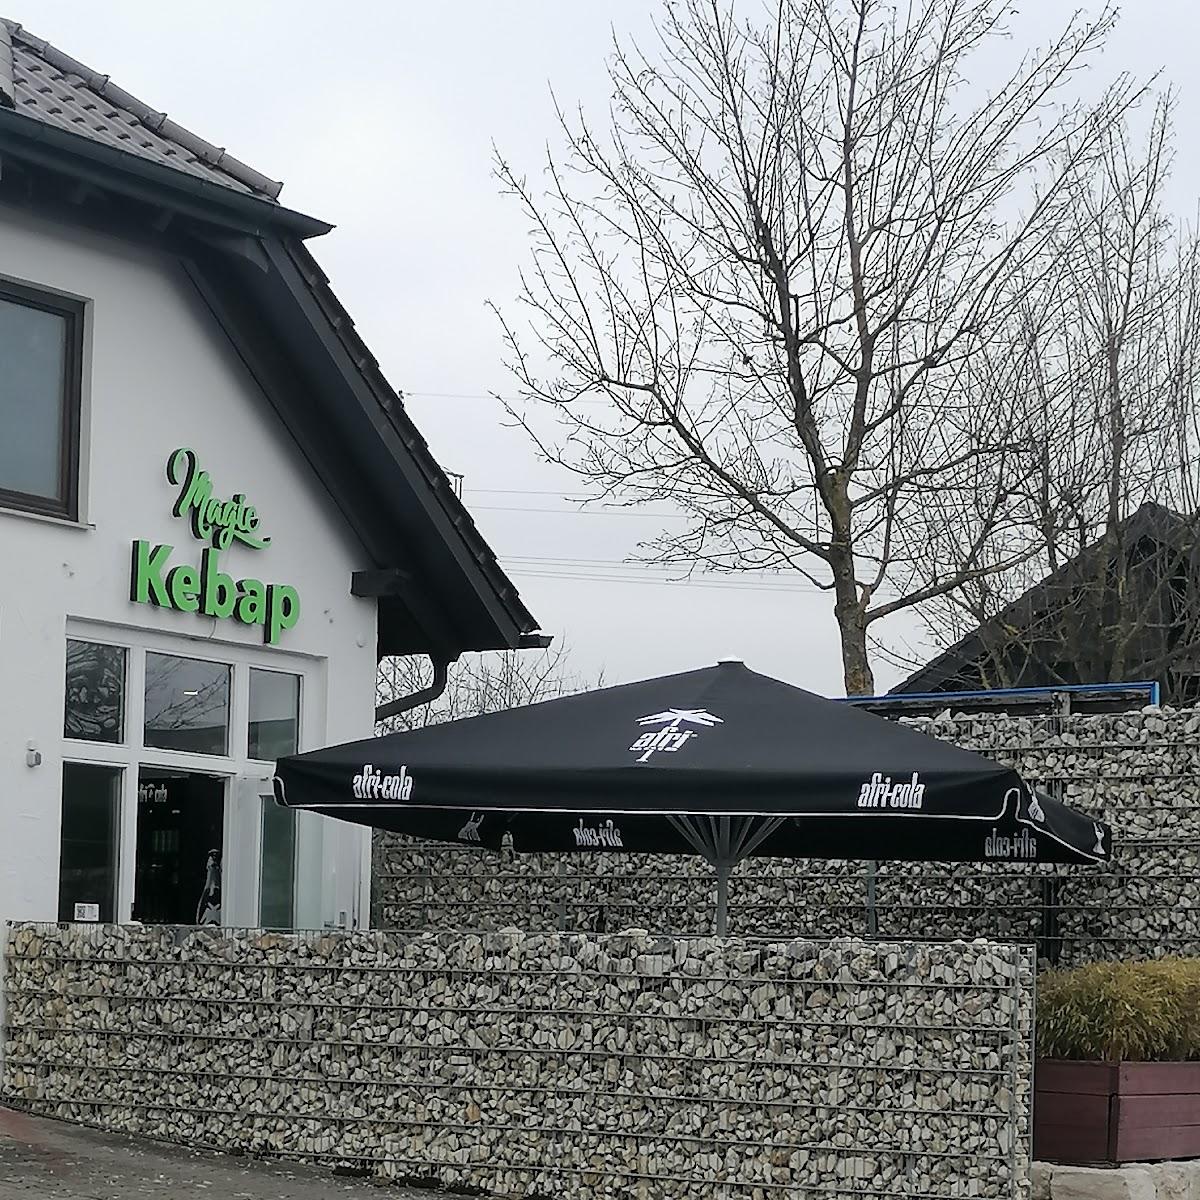 Restaurant "Magic Kebap" in Lauingen